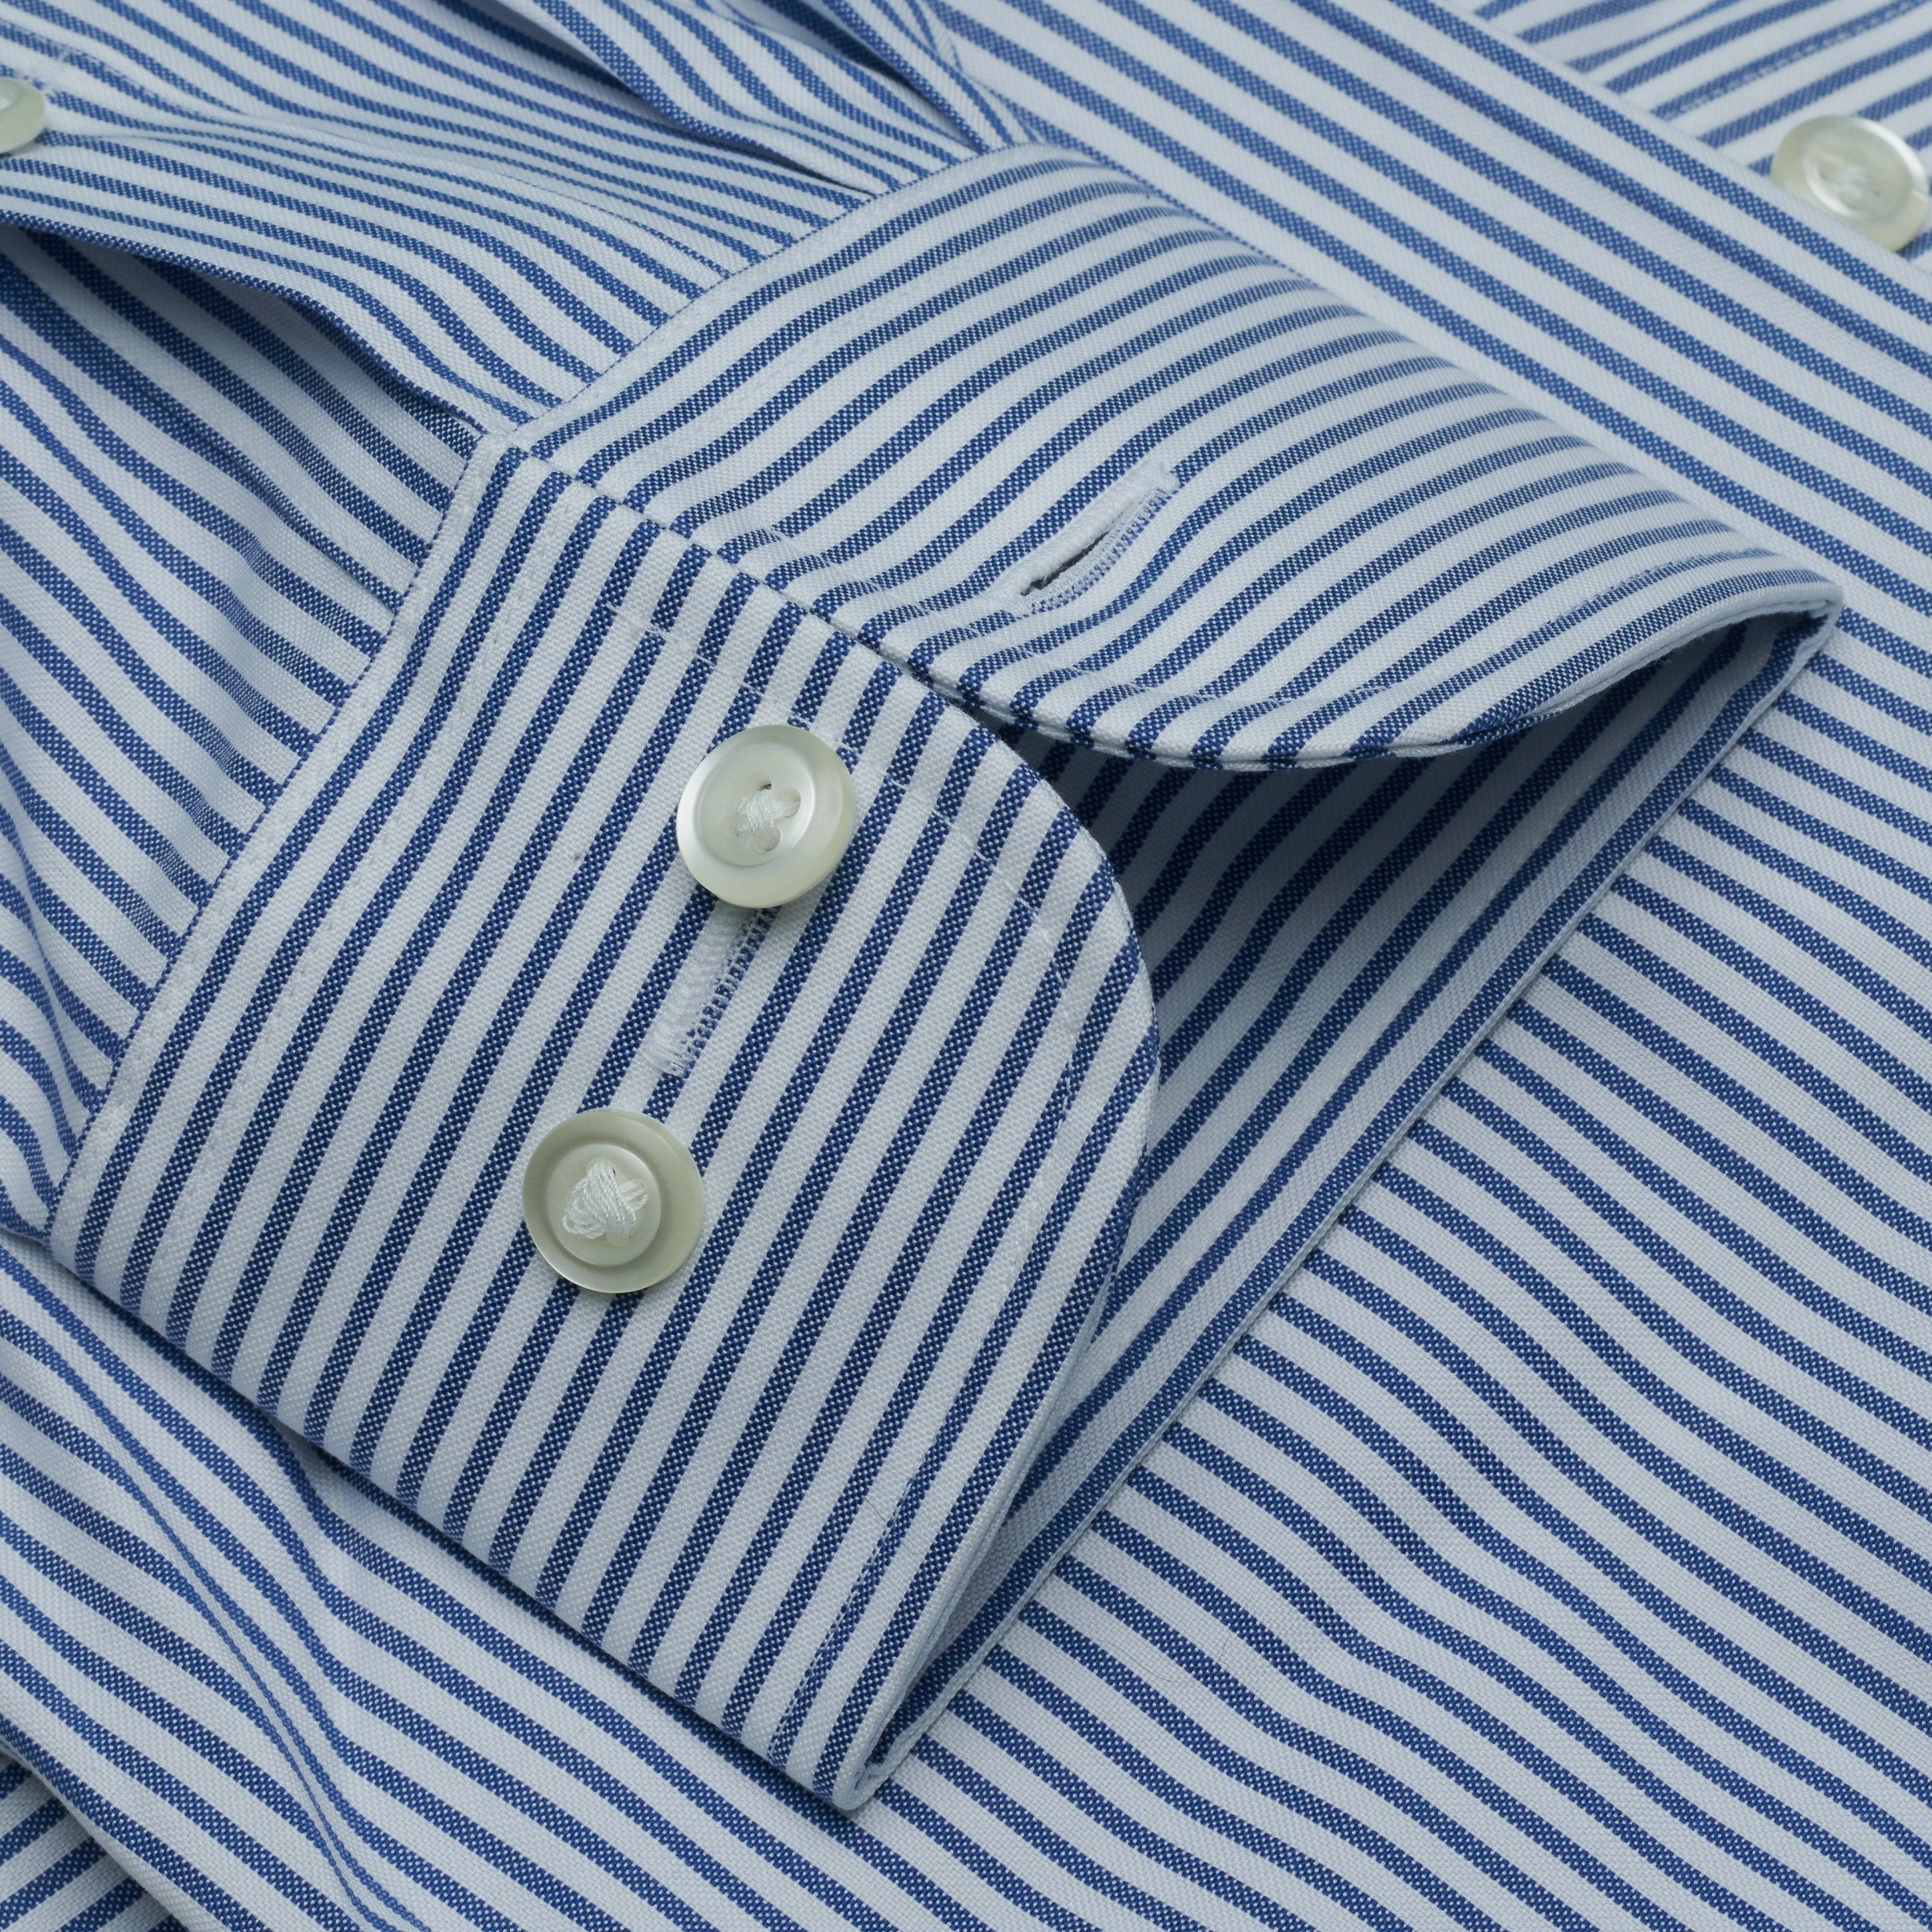 THE BURLINGTON - Blue Bankers Stripe SC Dress Shirt Cooper and Stewart 